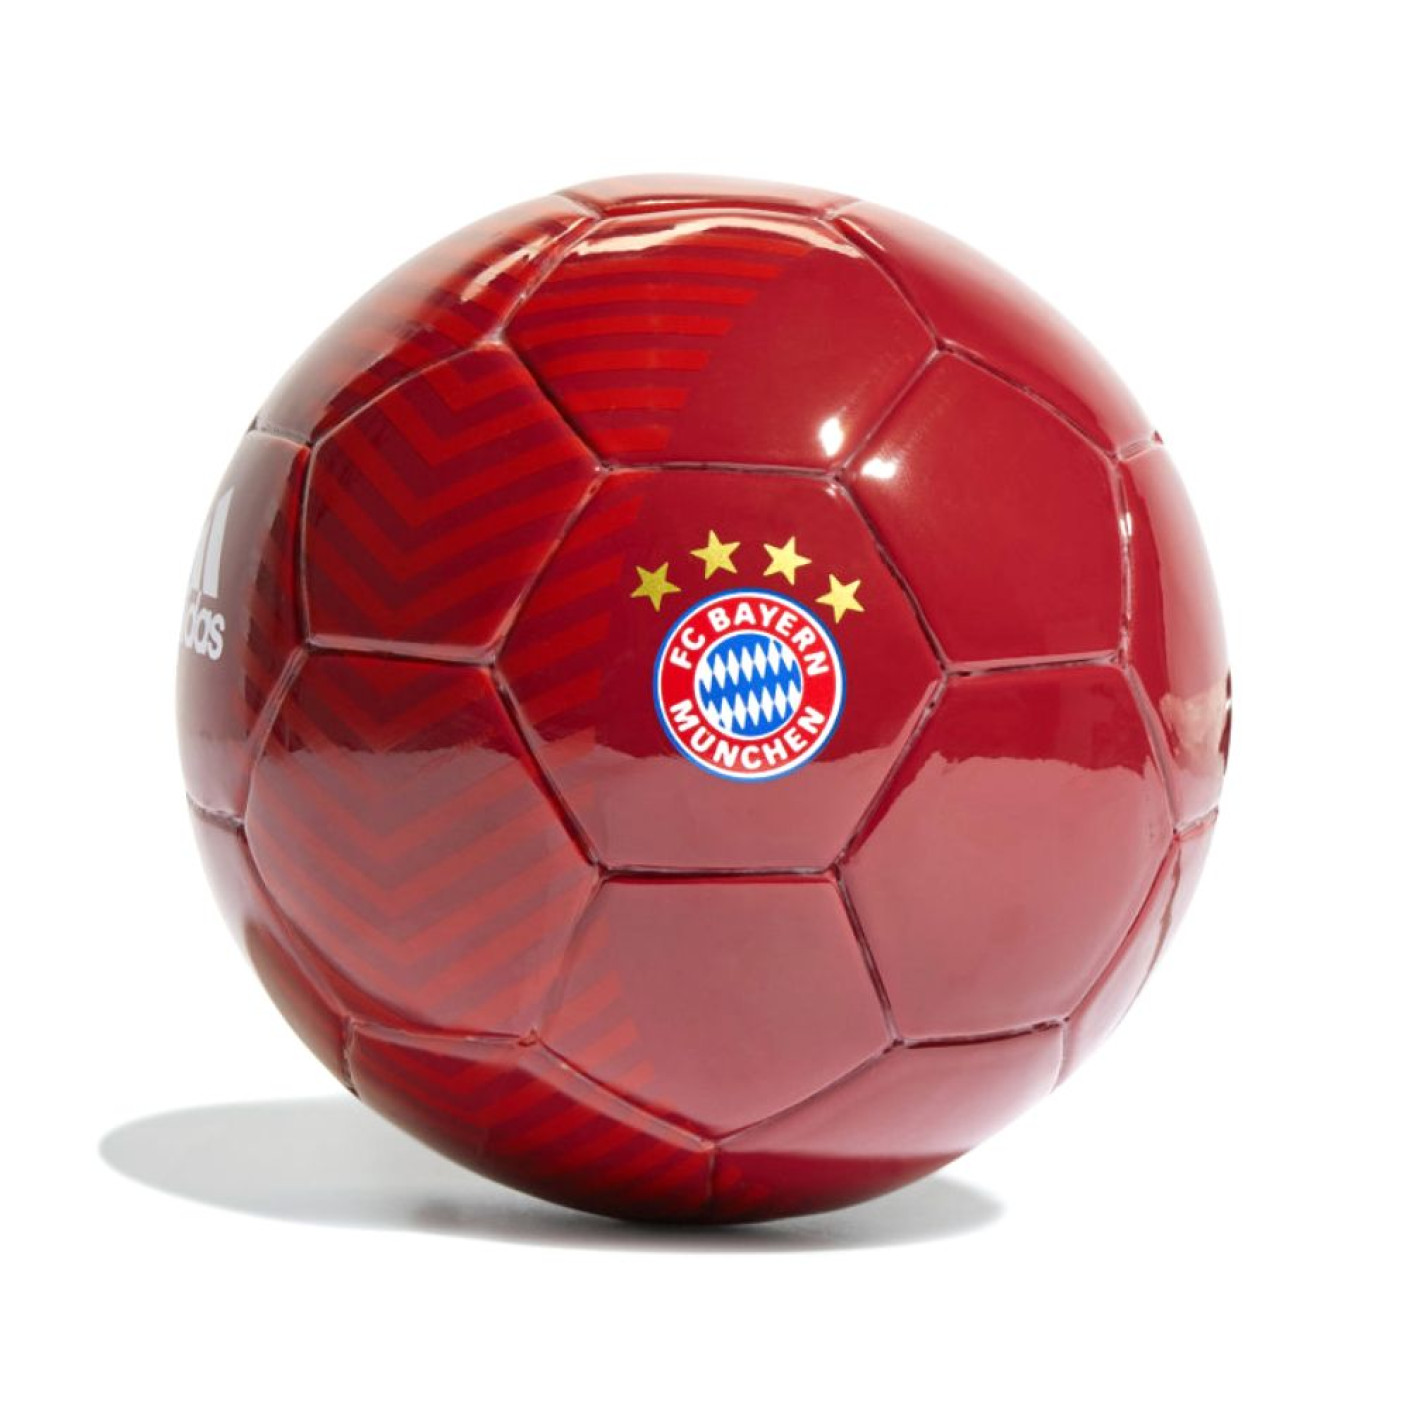 Mini Football Adidas Bayern Munchen Taille 1 Rouge Blanc